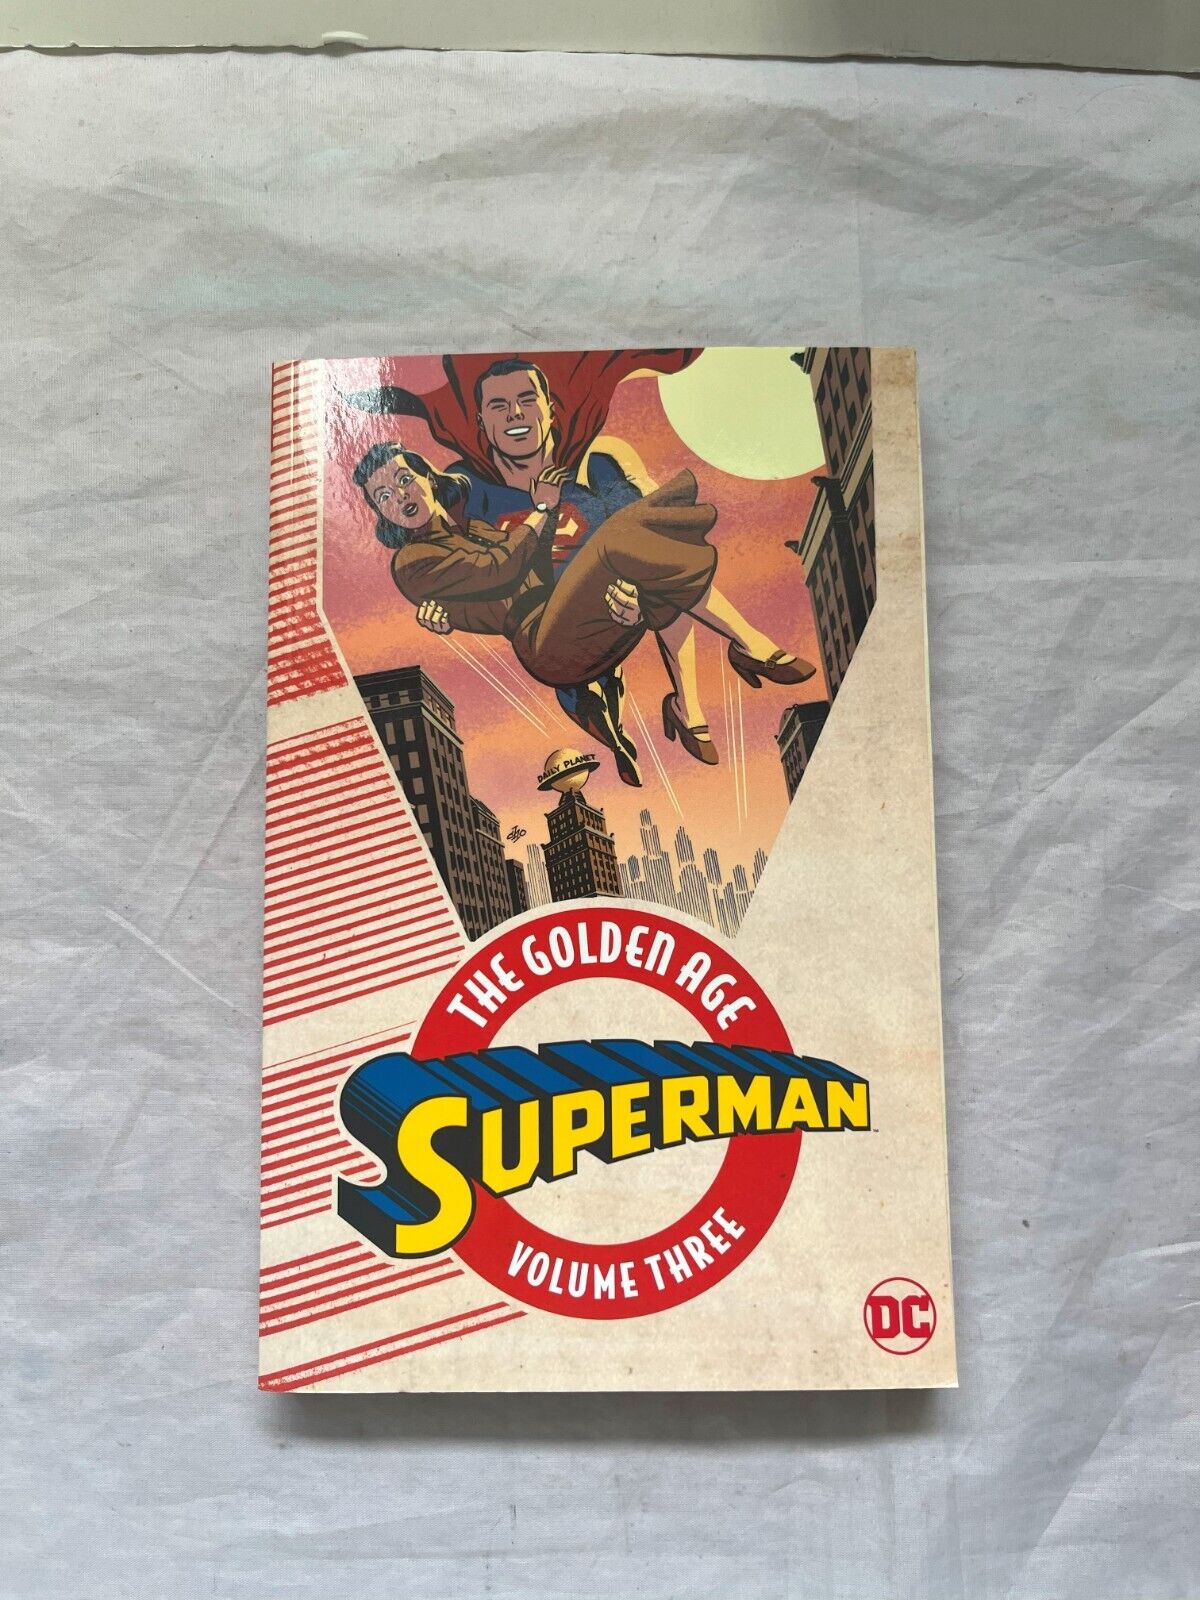 Superman: The Golden Age Vol. 3